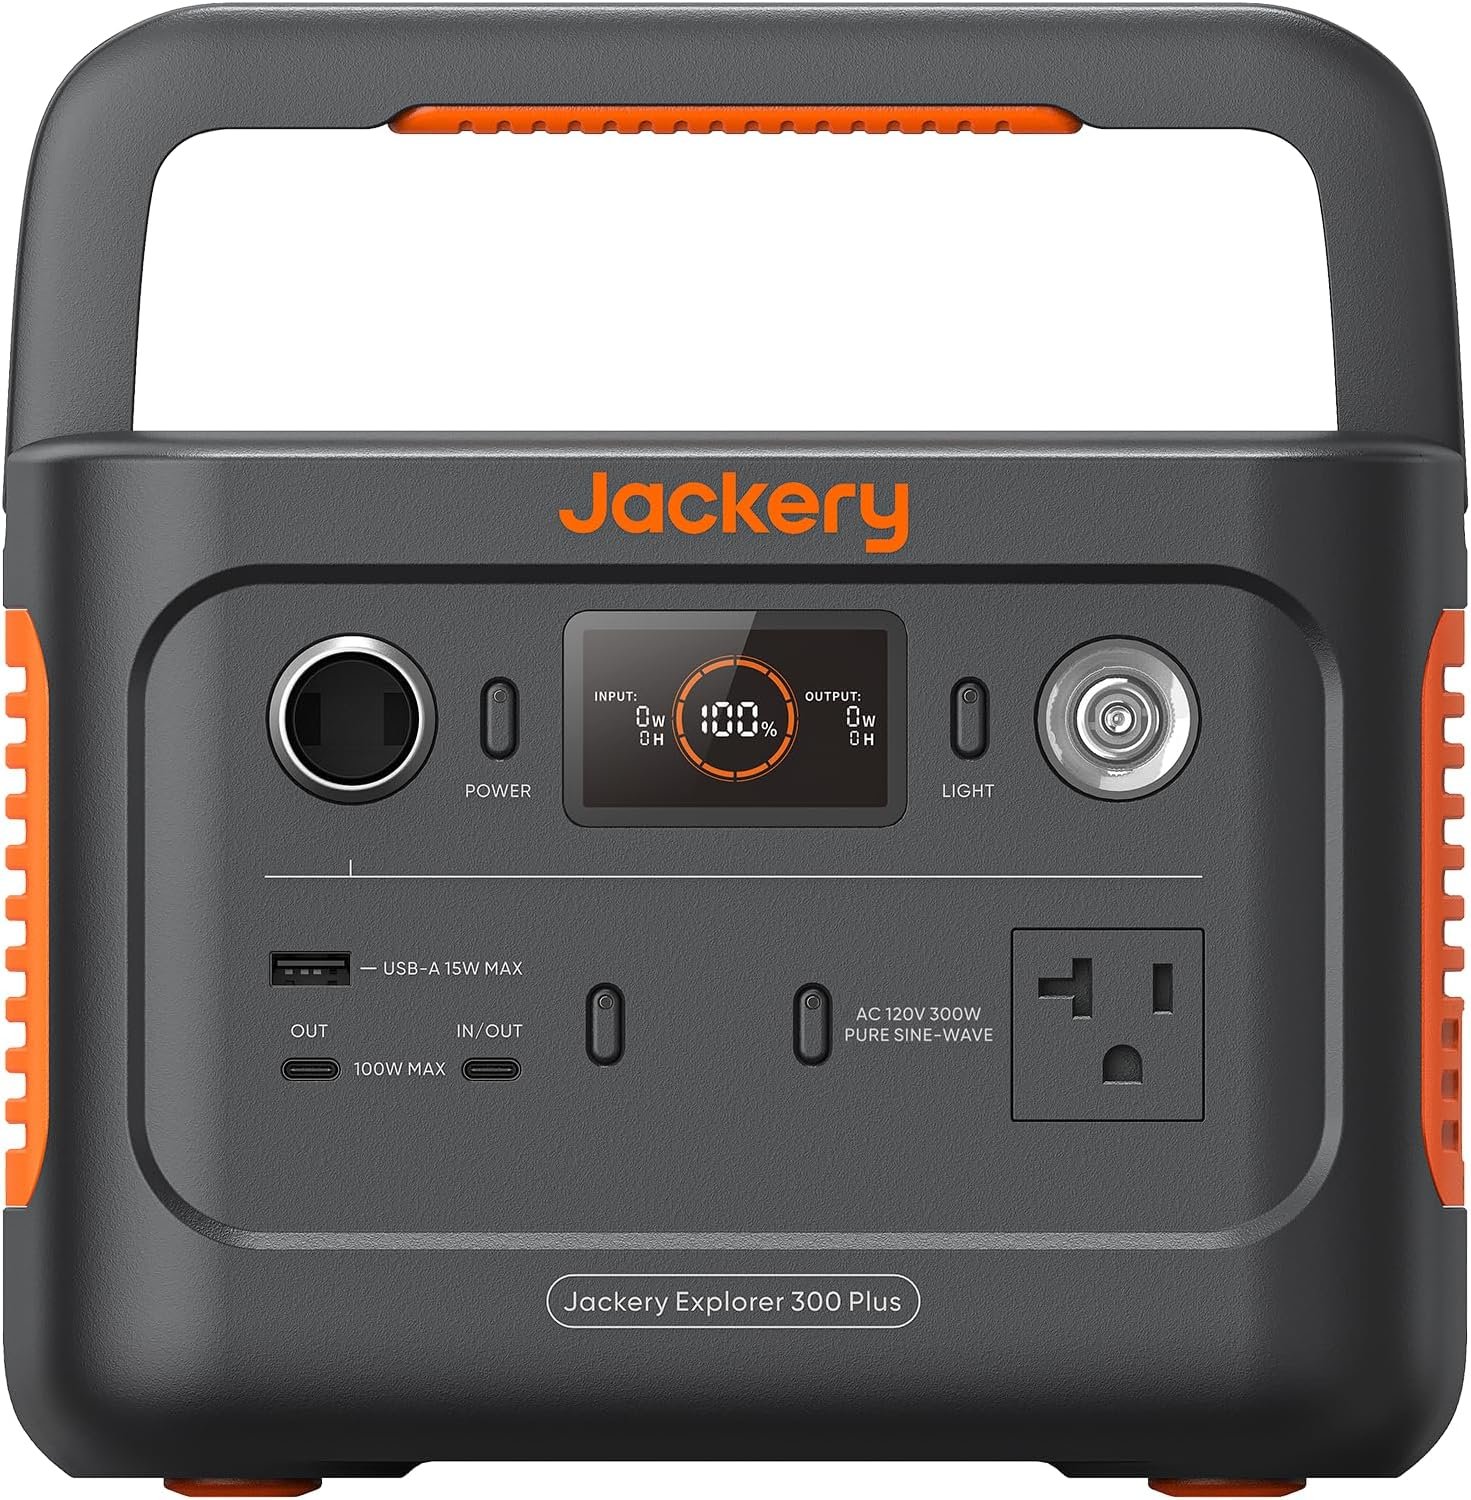 Jackery Explorer 300 Plus Portable Power Station Review